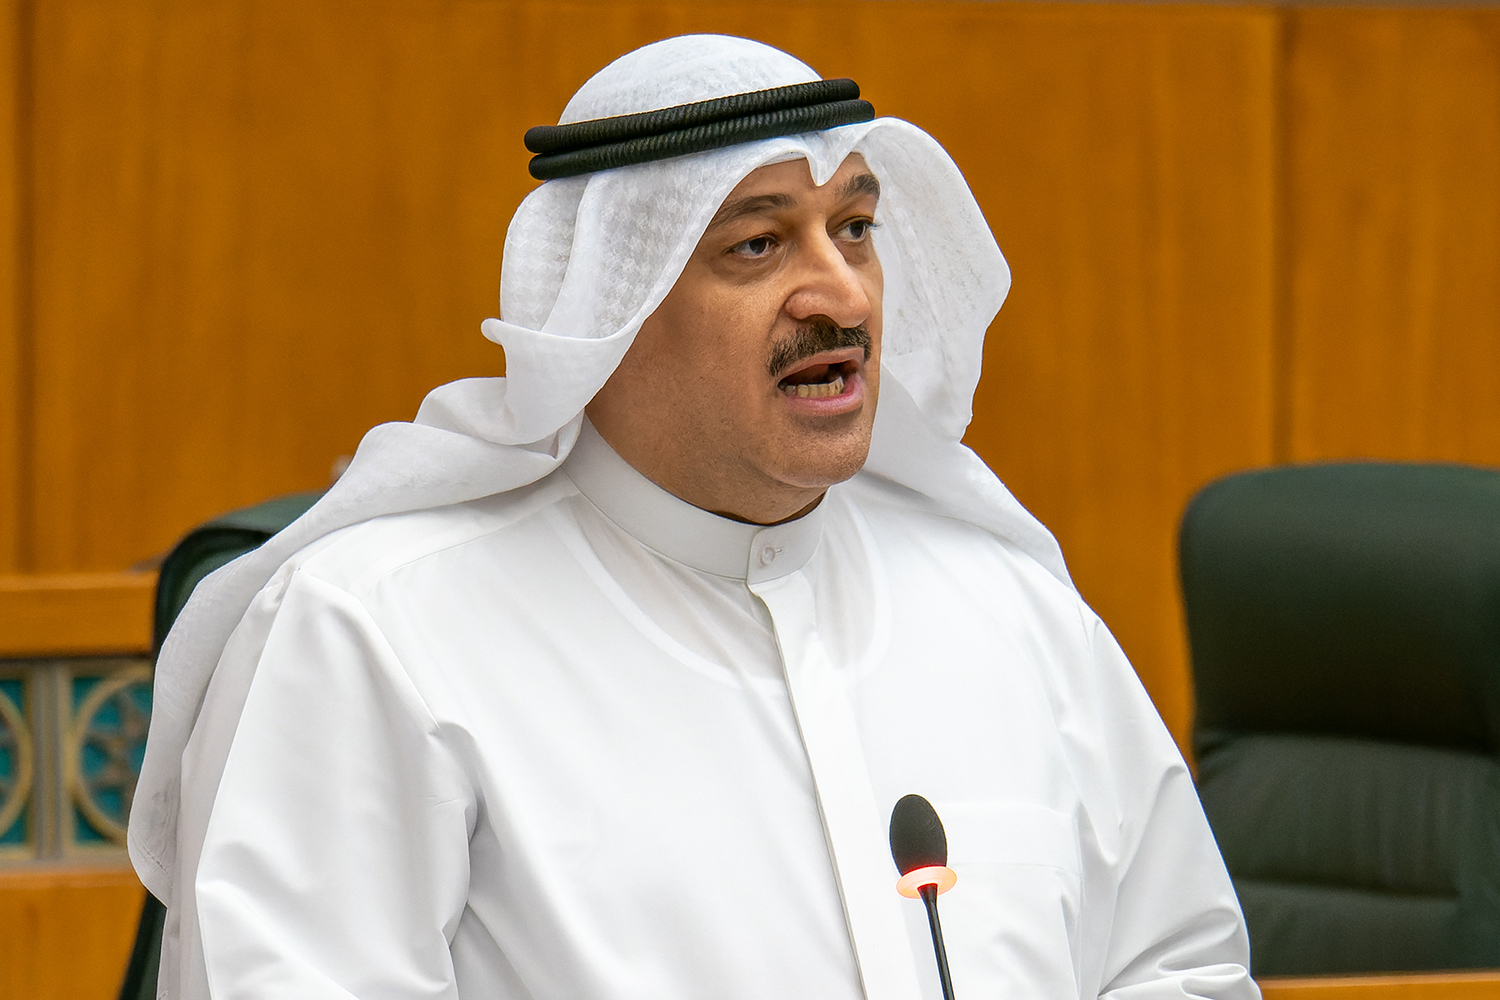 Minister Dr. Ahmad Al-Awadhi